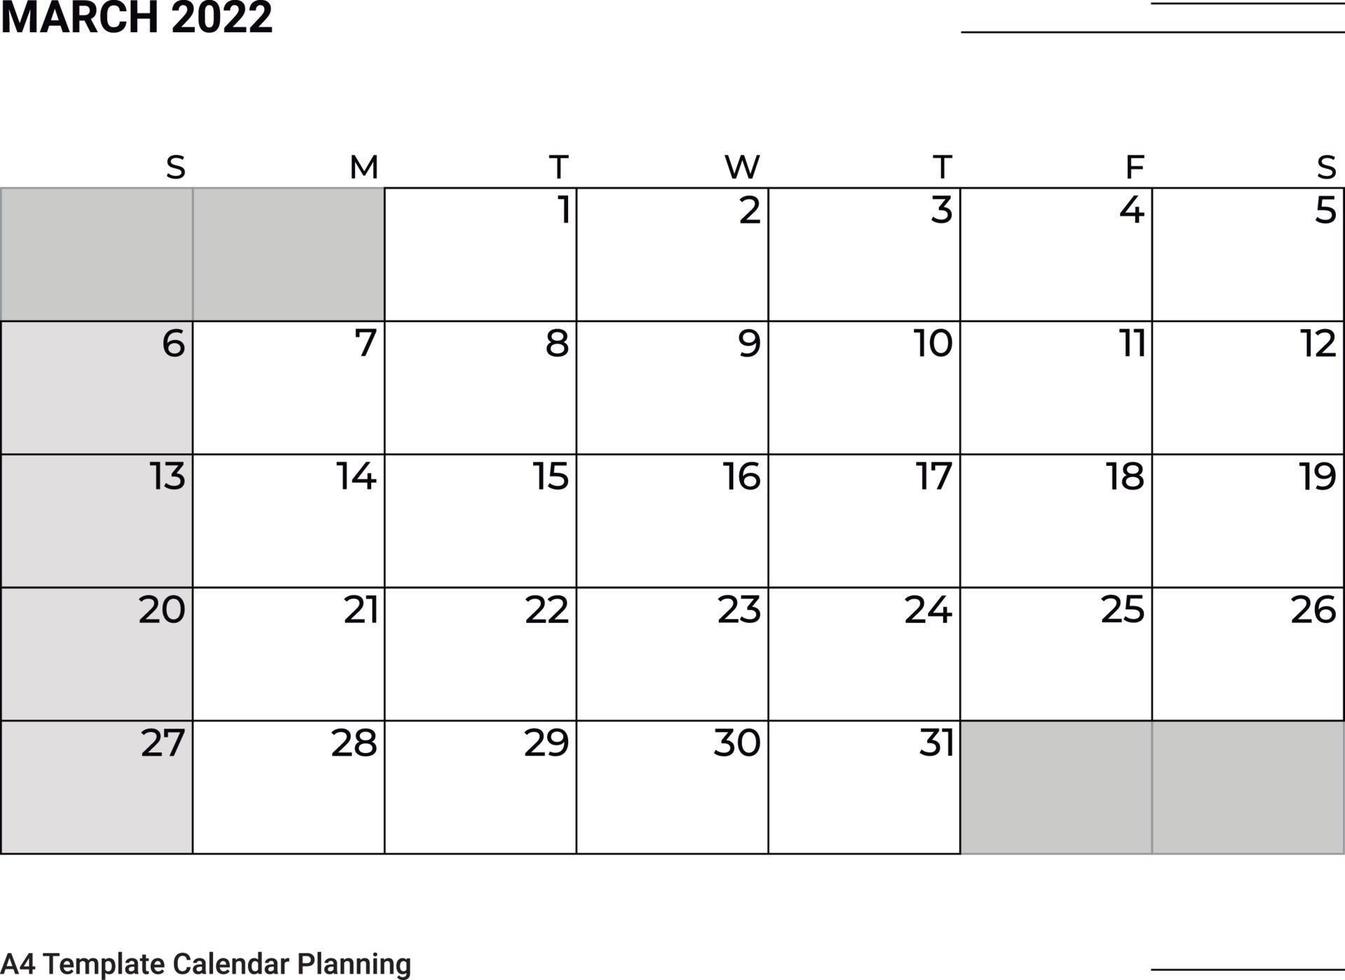 March 2022 Planning Calendar vector